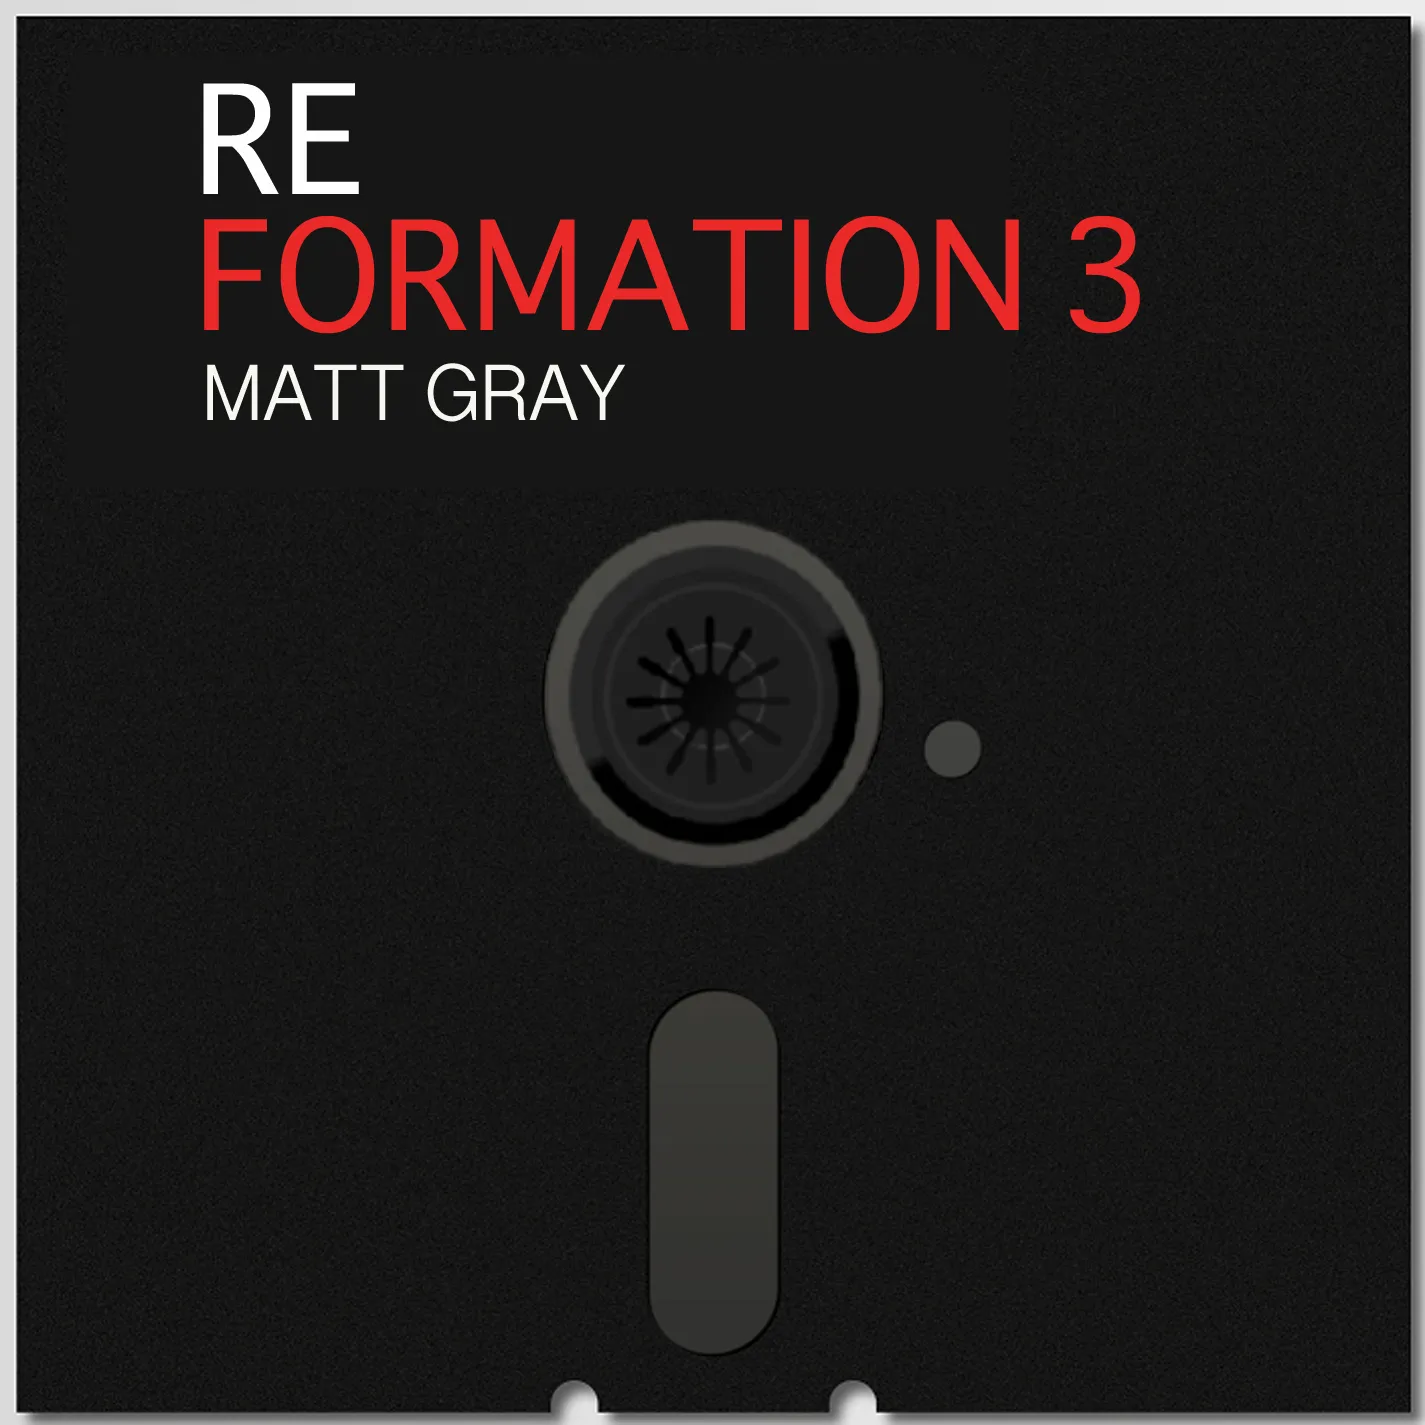 Reformation 3
© (C) 2020 6581 Records